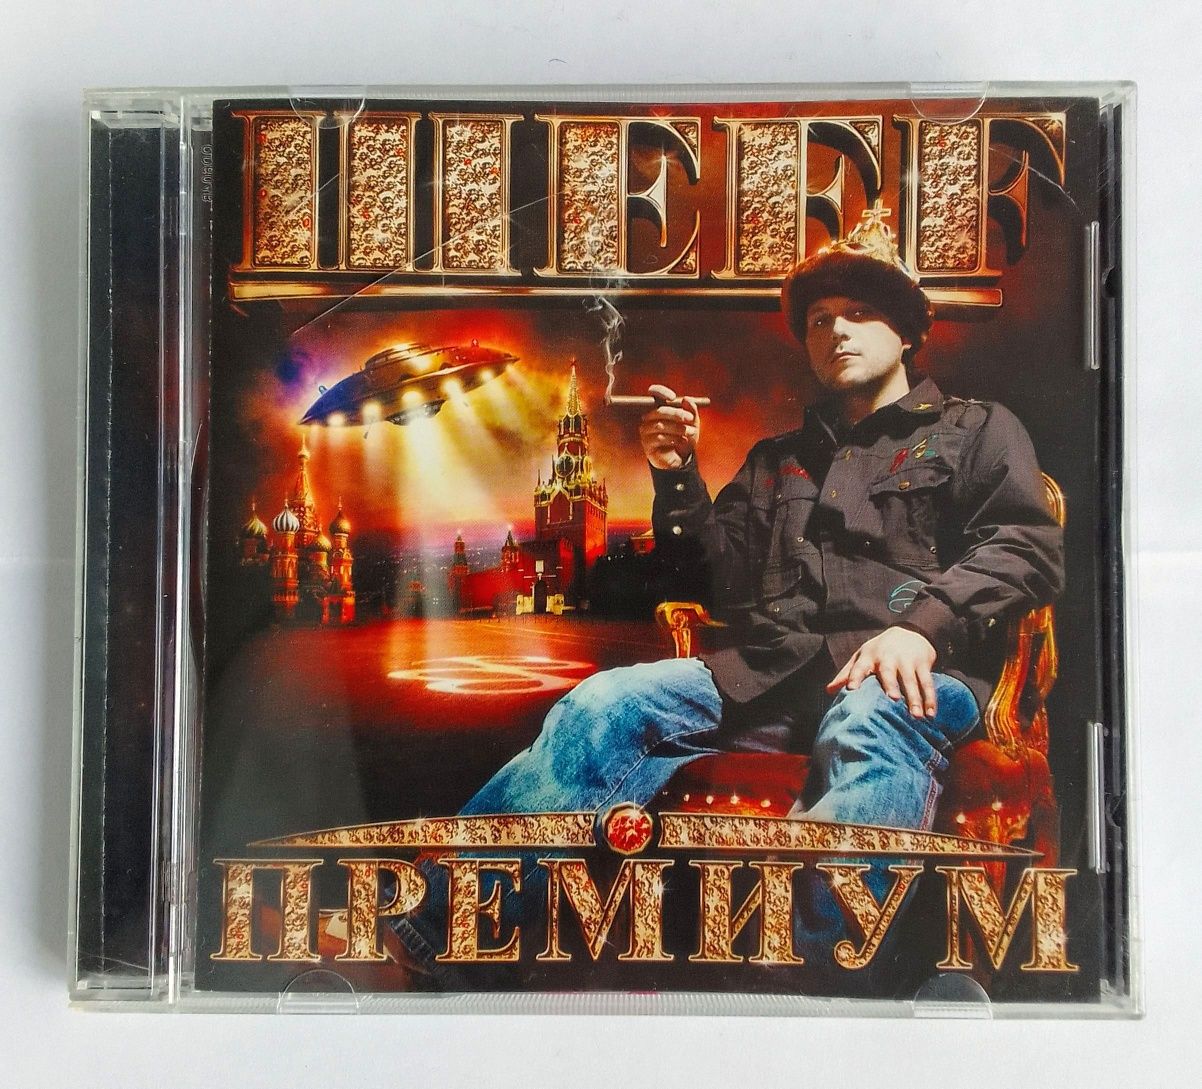 CD ШЕFF Премиум 2011 лицензия 100PRO rap рэп хип-хоп hip-hop music